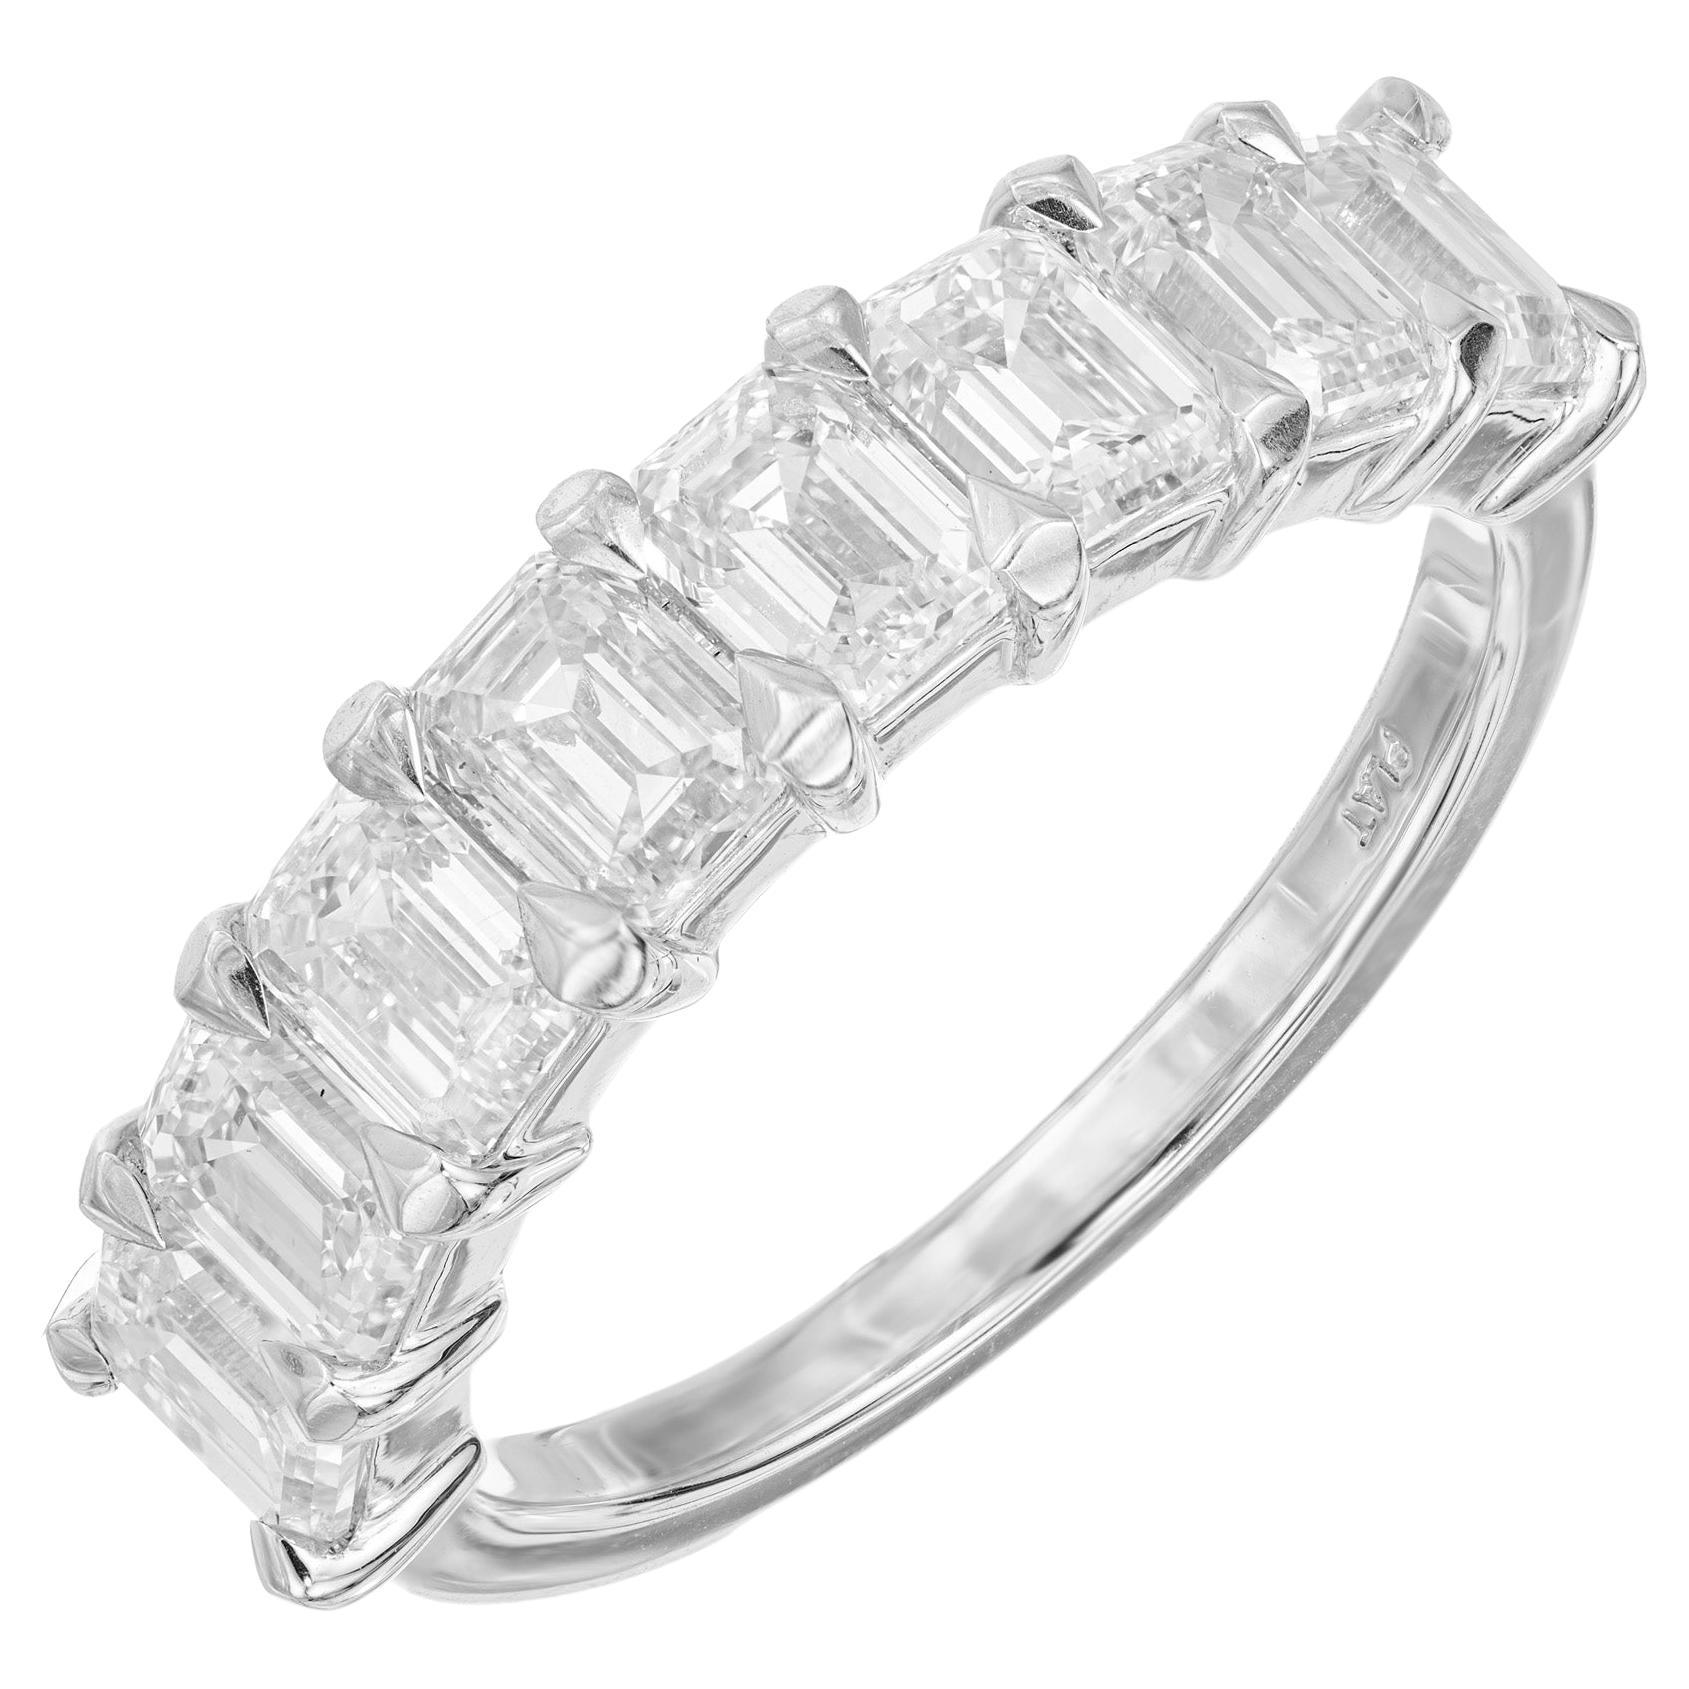 Peter Suchy 2.48 Carat Emerald Cut Diamond Platinum Wedding Band Ring For Sale